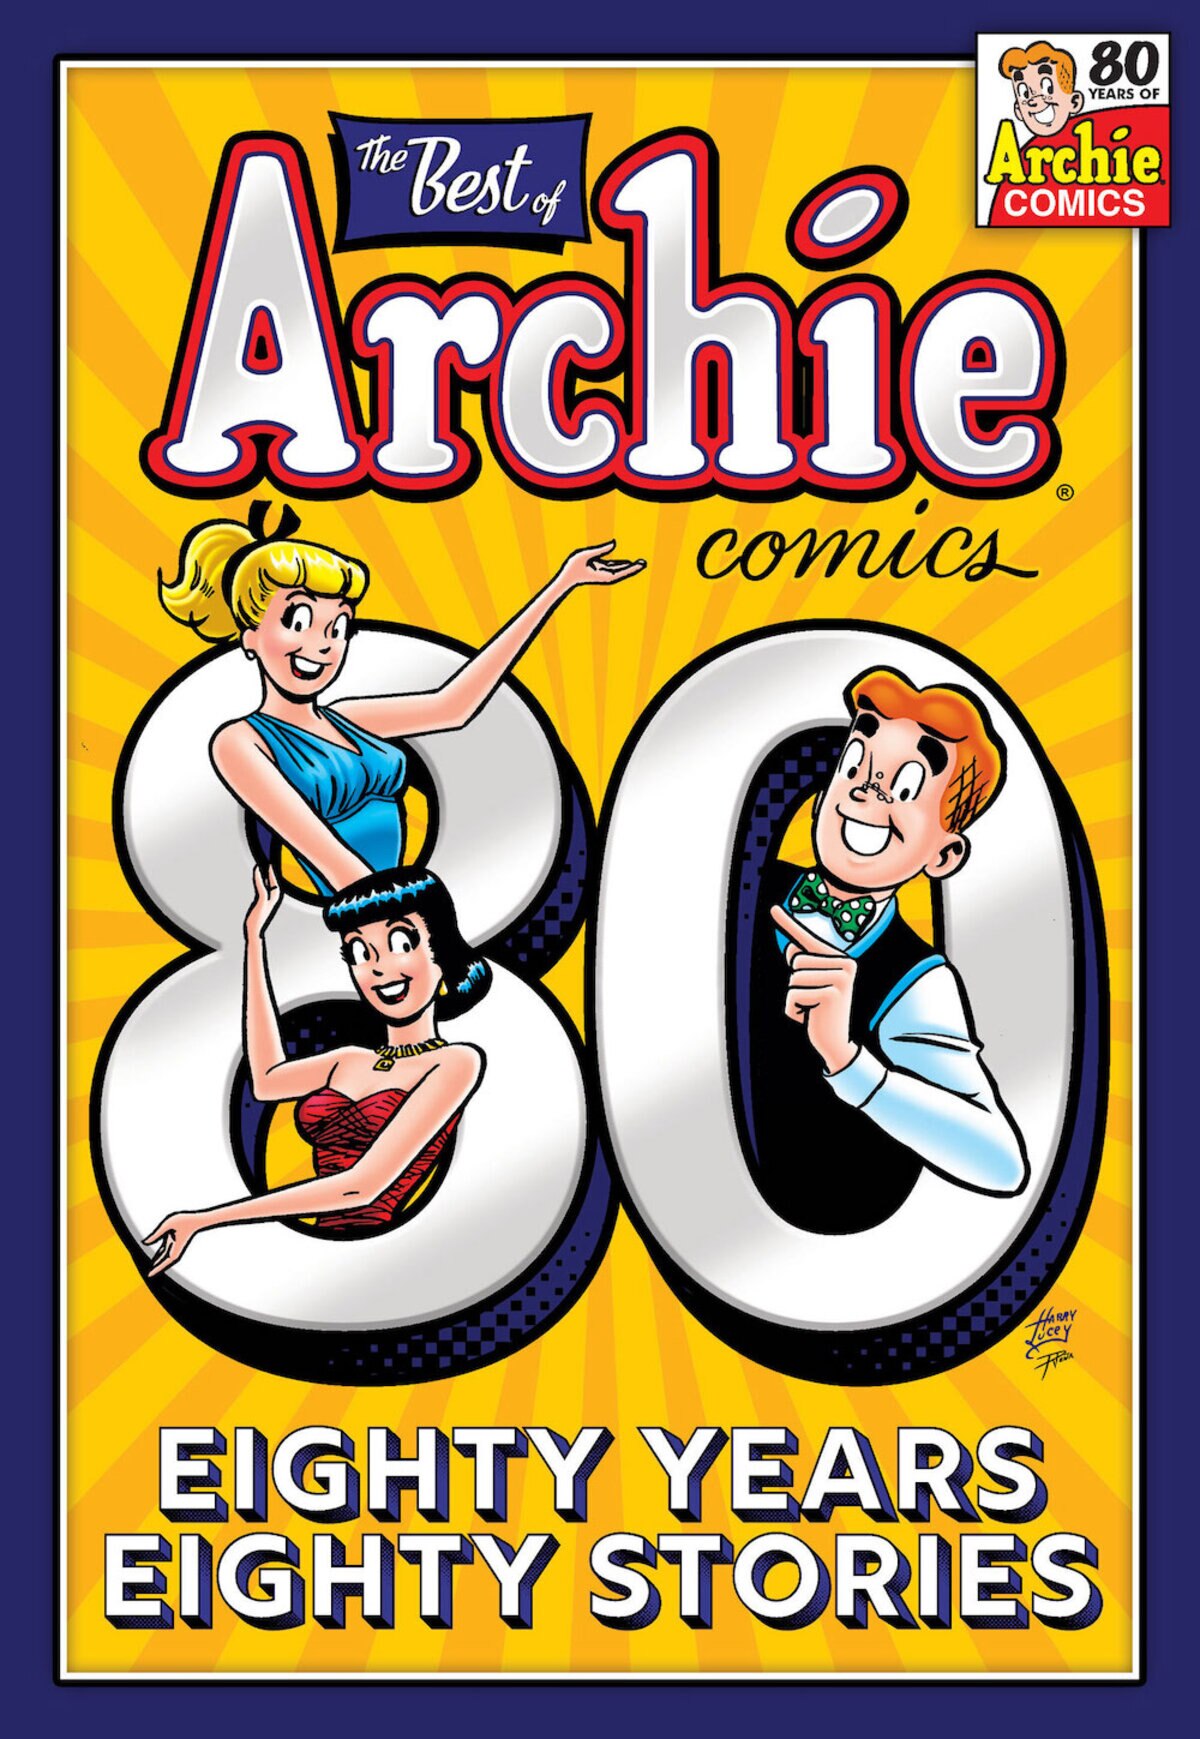 Archie Comics celebrates its 80th anniversary | SYFY WIRE